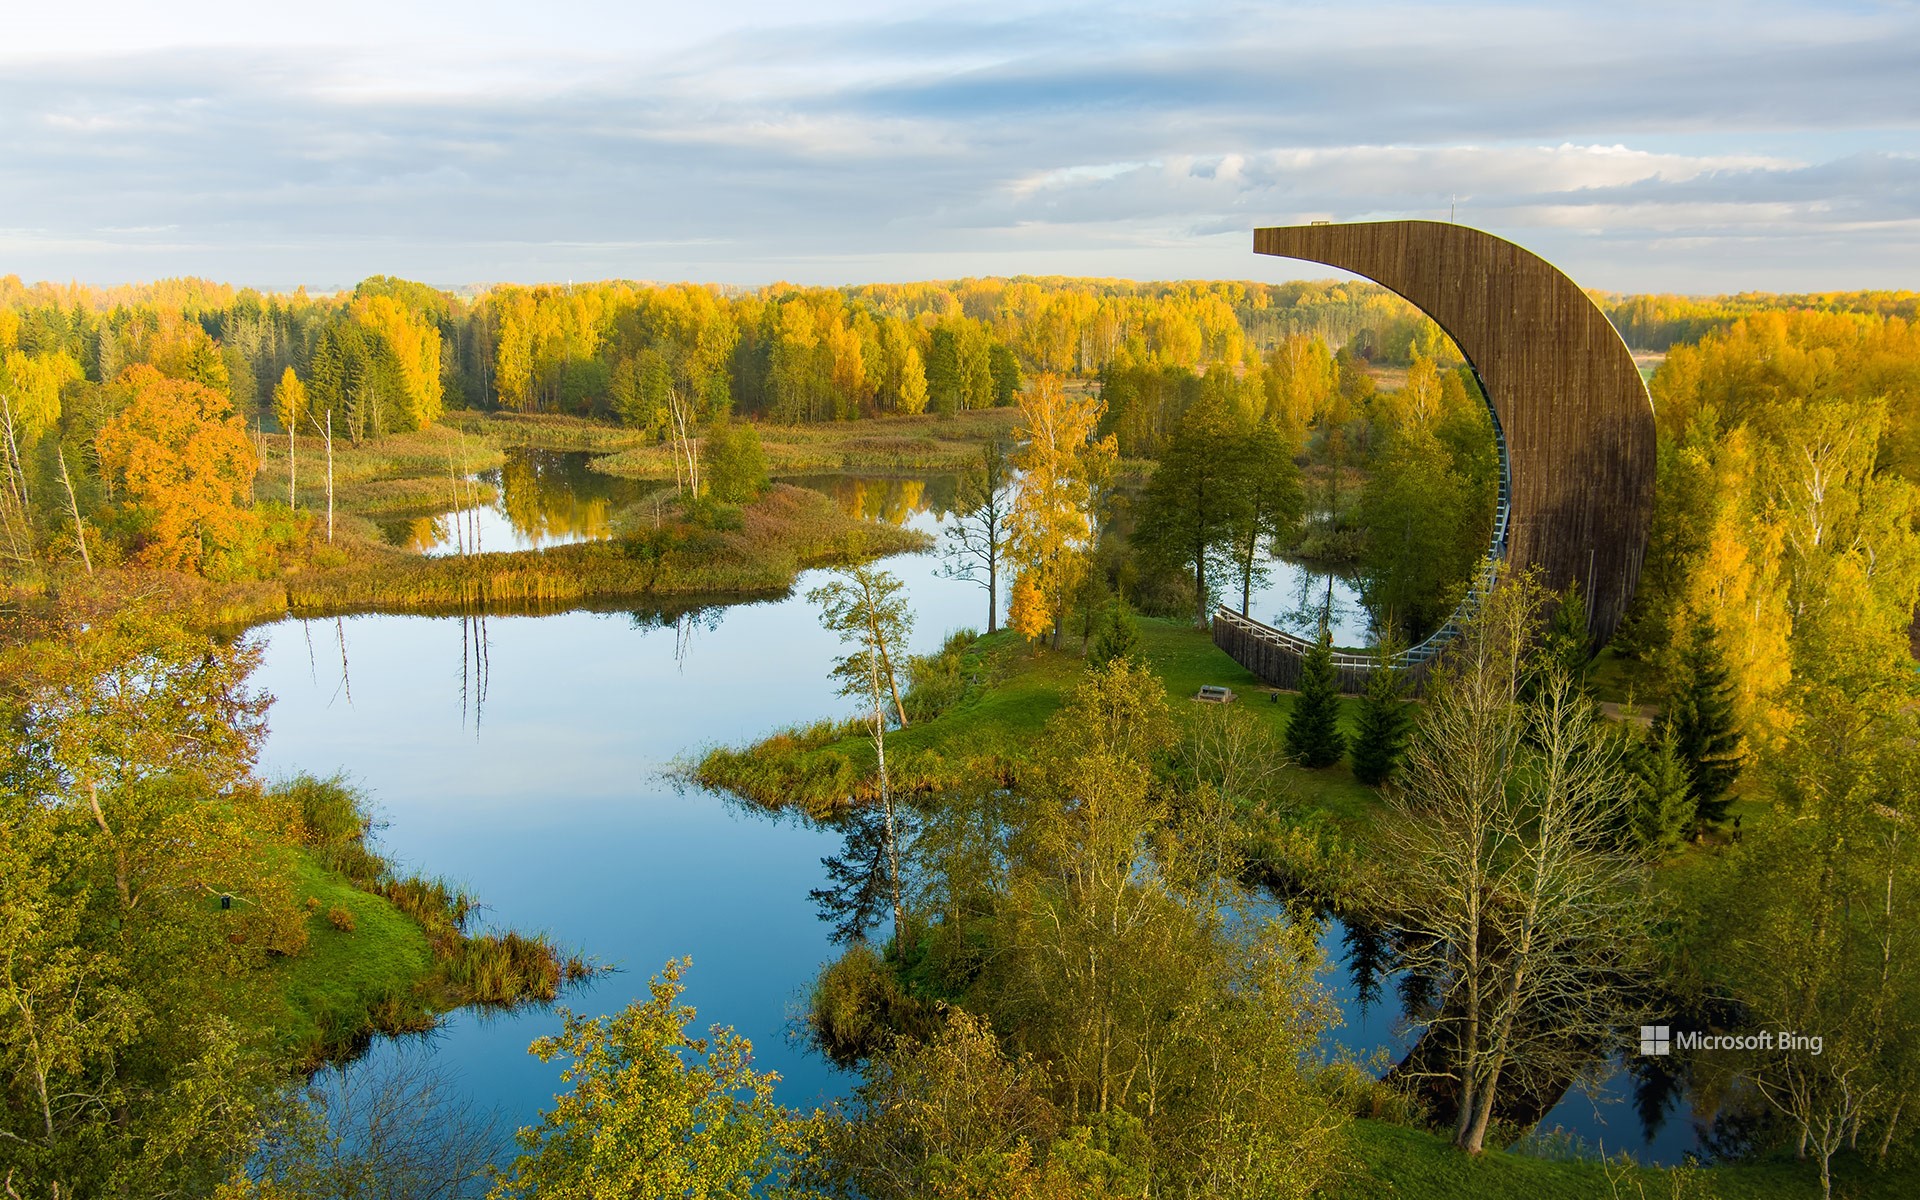 Kirkilai lakes and lookout tower, Biržai Regional Park, Lithuania